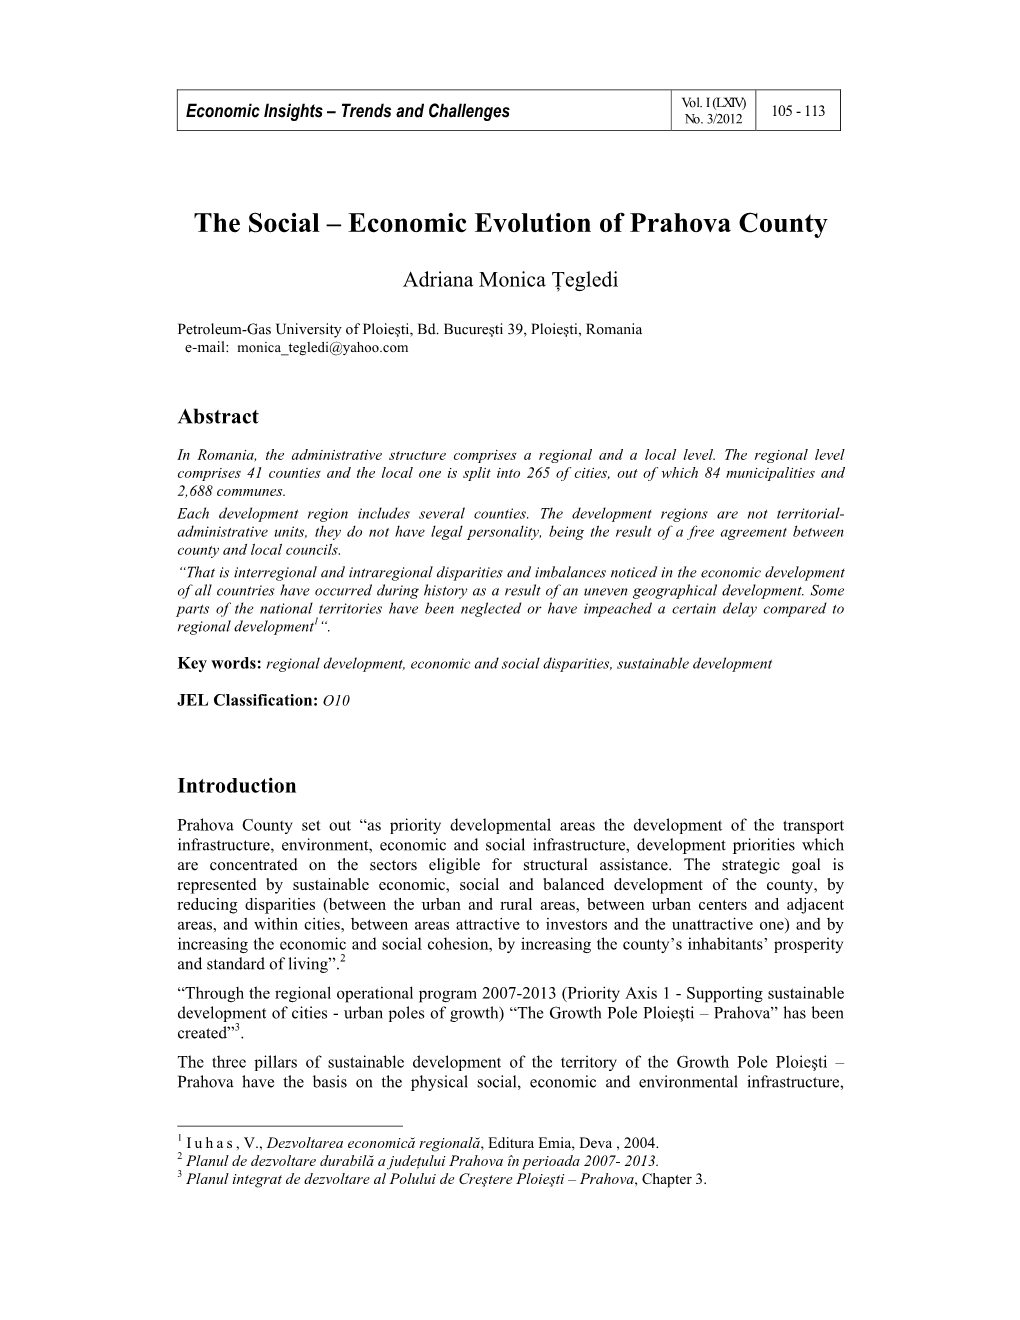 The Social – Economic Evolution of Prahova County Adriana Monica